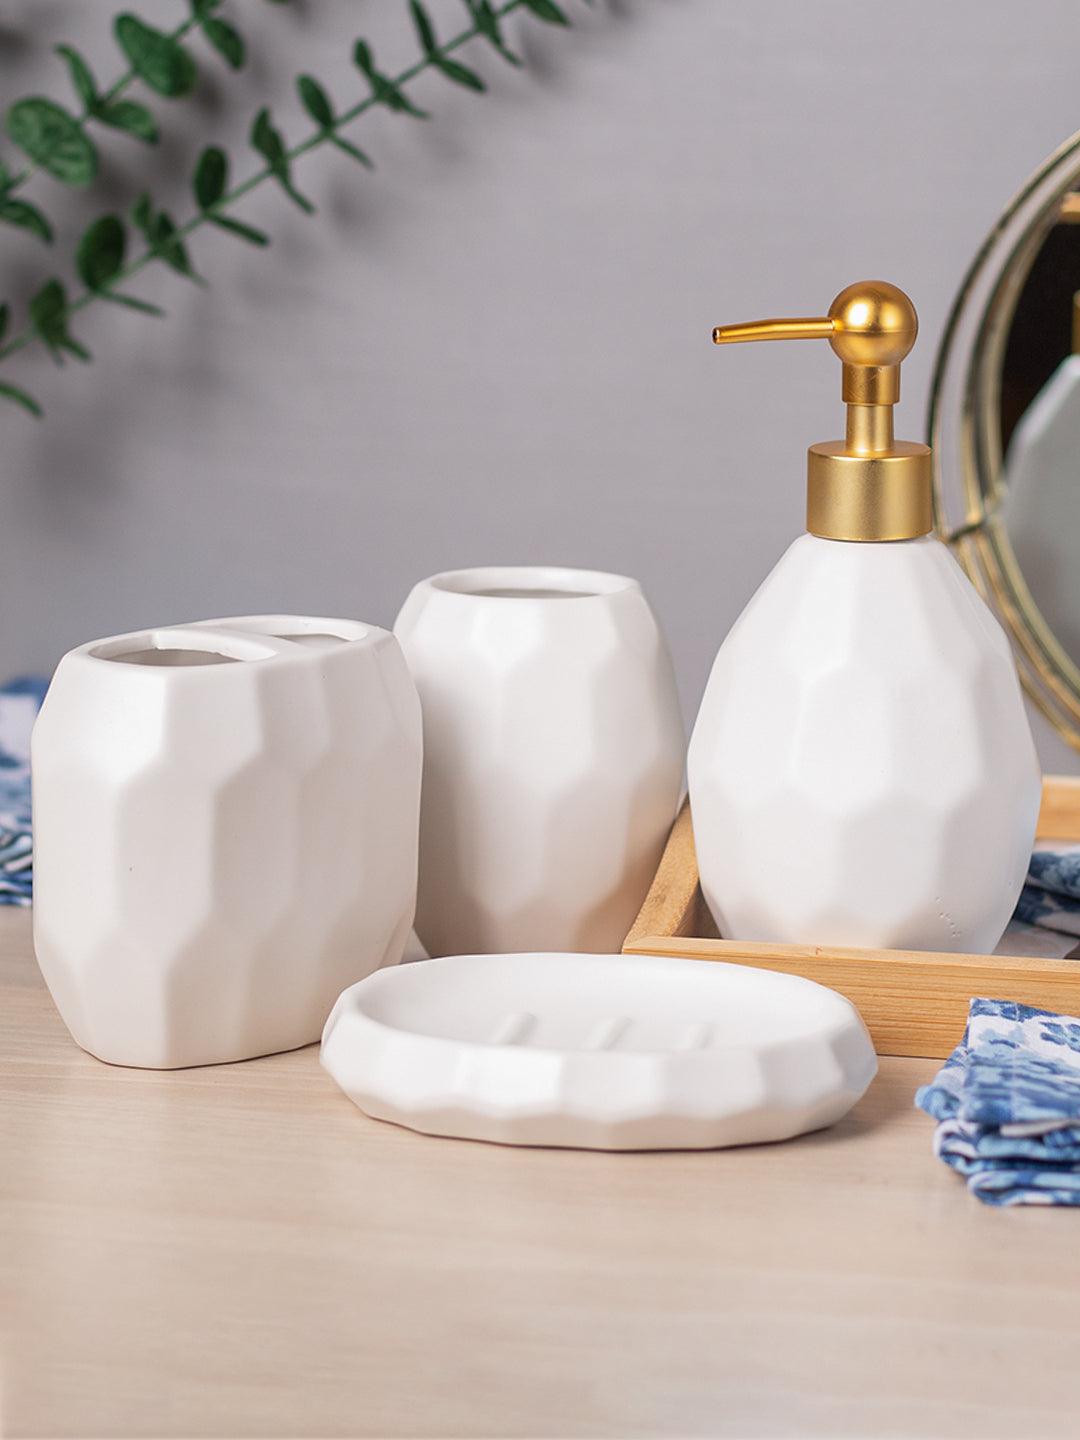 White Ceramic Bathroom Set Of 4 - Stone Finish, Bath Accessories - 1